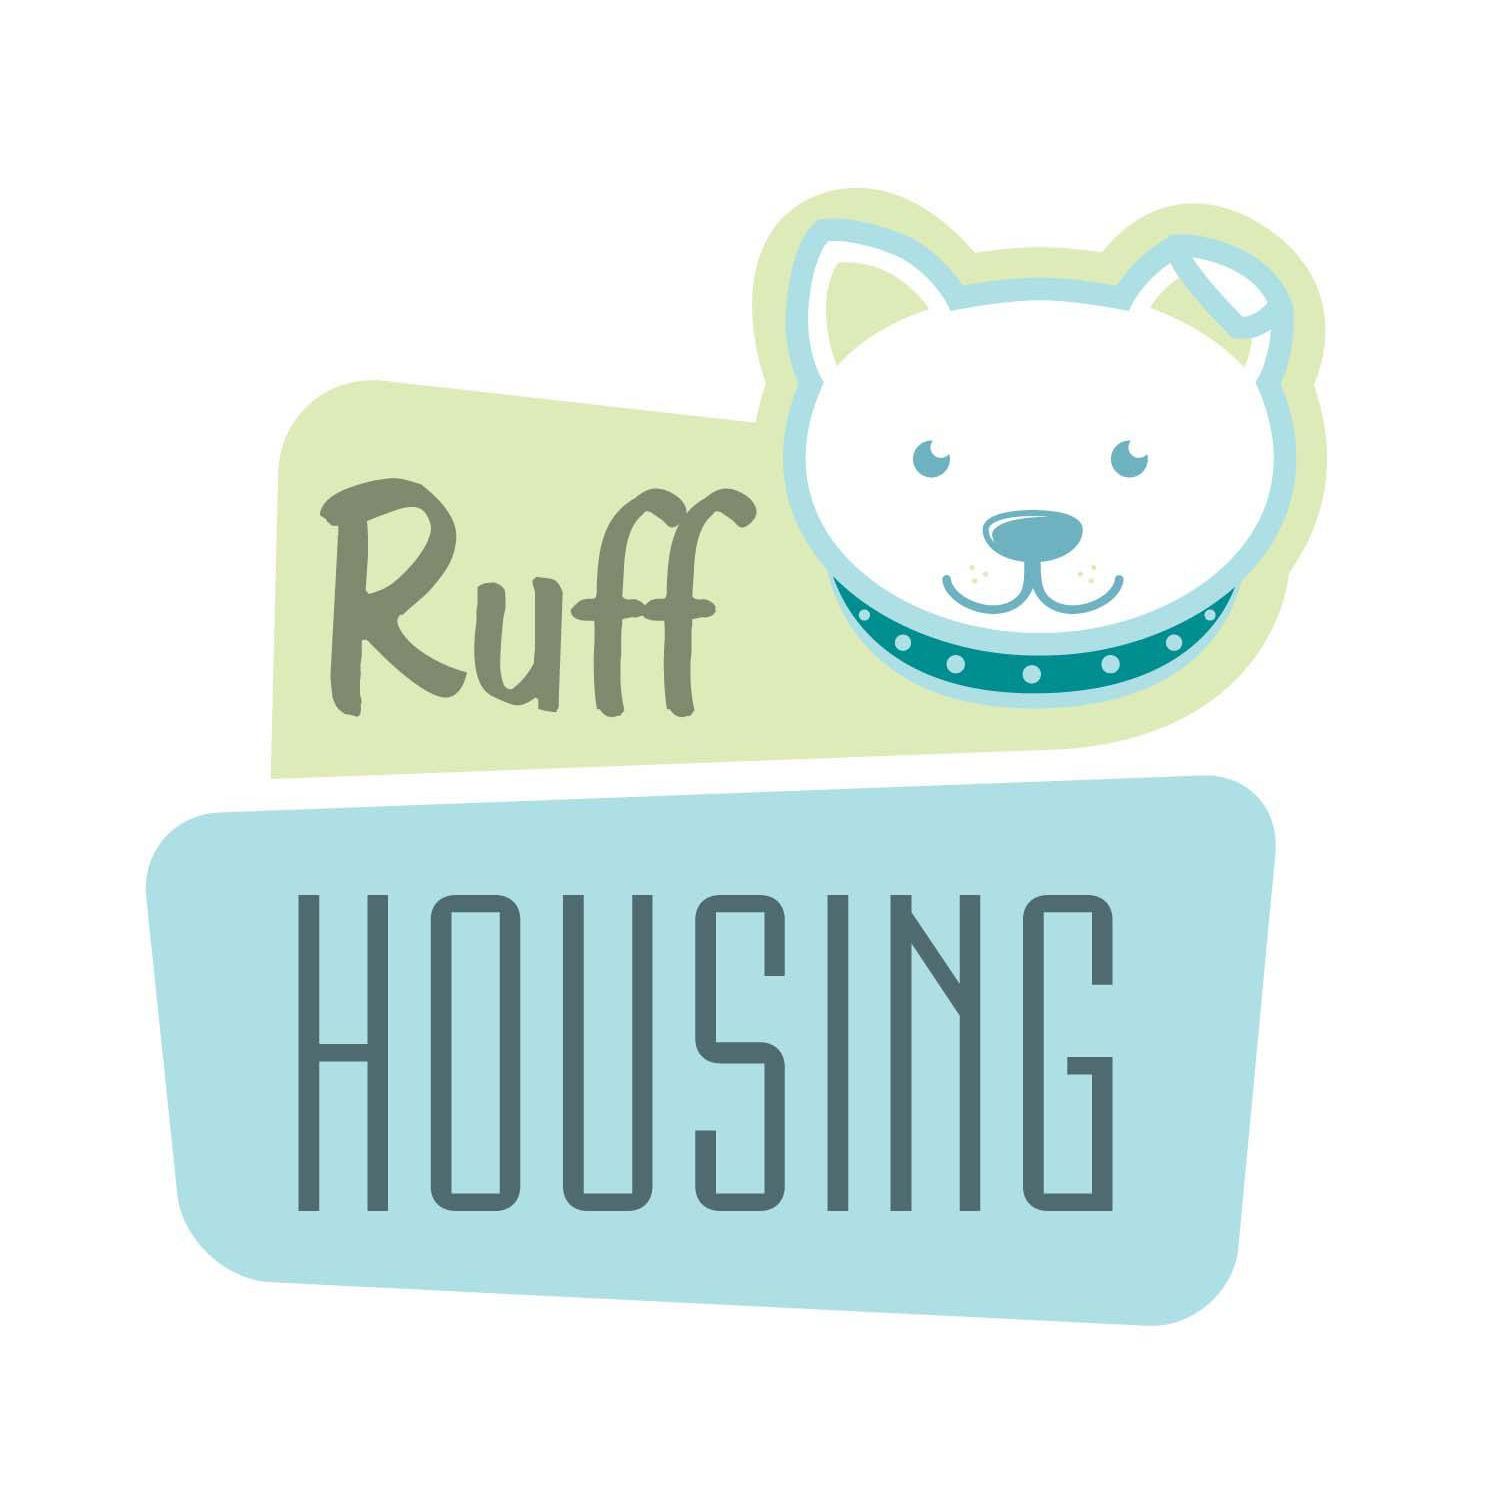 Ruff Housing Greensboro - Greensboro, NC 27408 - (336)602-1538 | ShowMeLocal.com